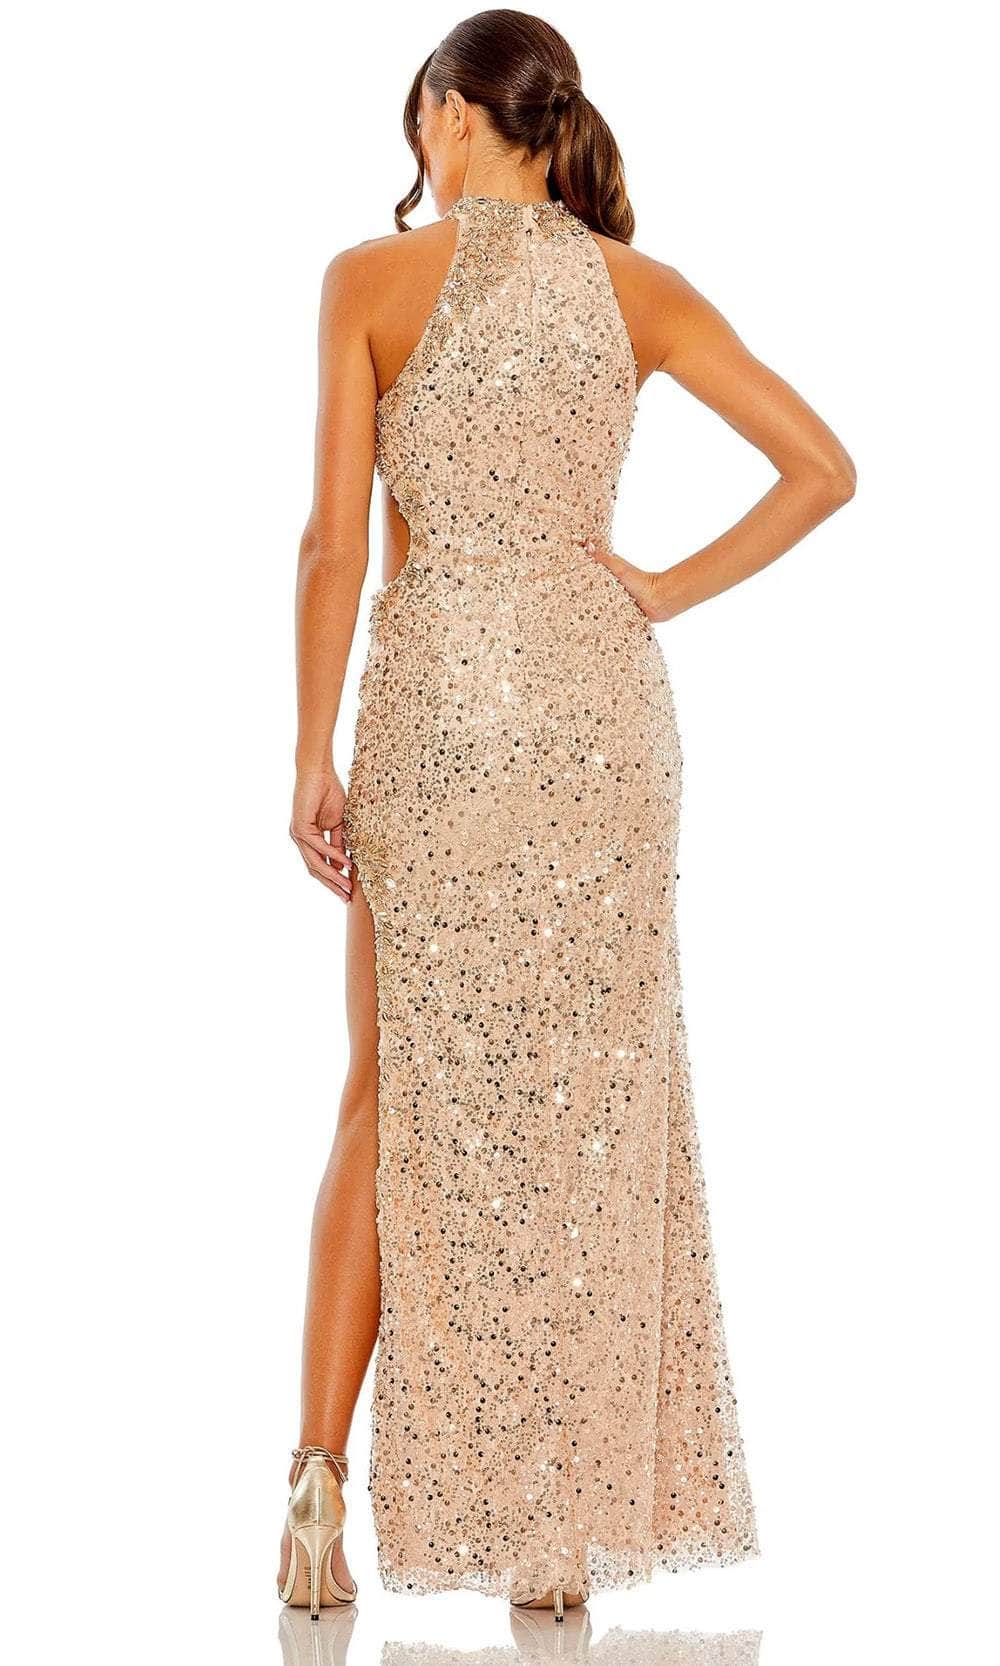 Mac Duggal 49679 - Beaded Halter Evening Gown Evening Dresses Dresses